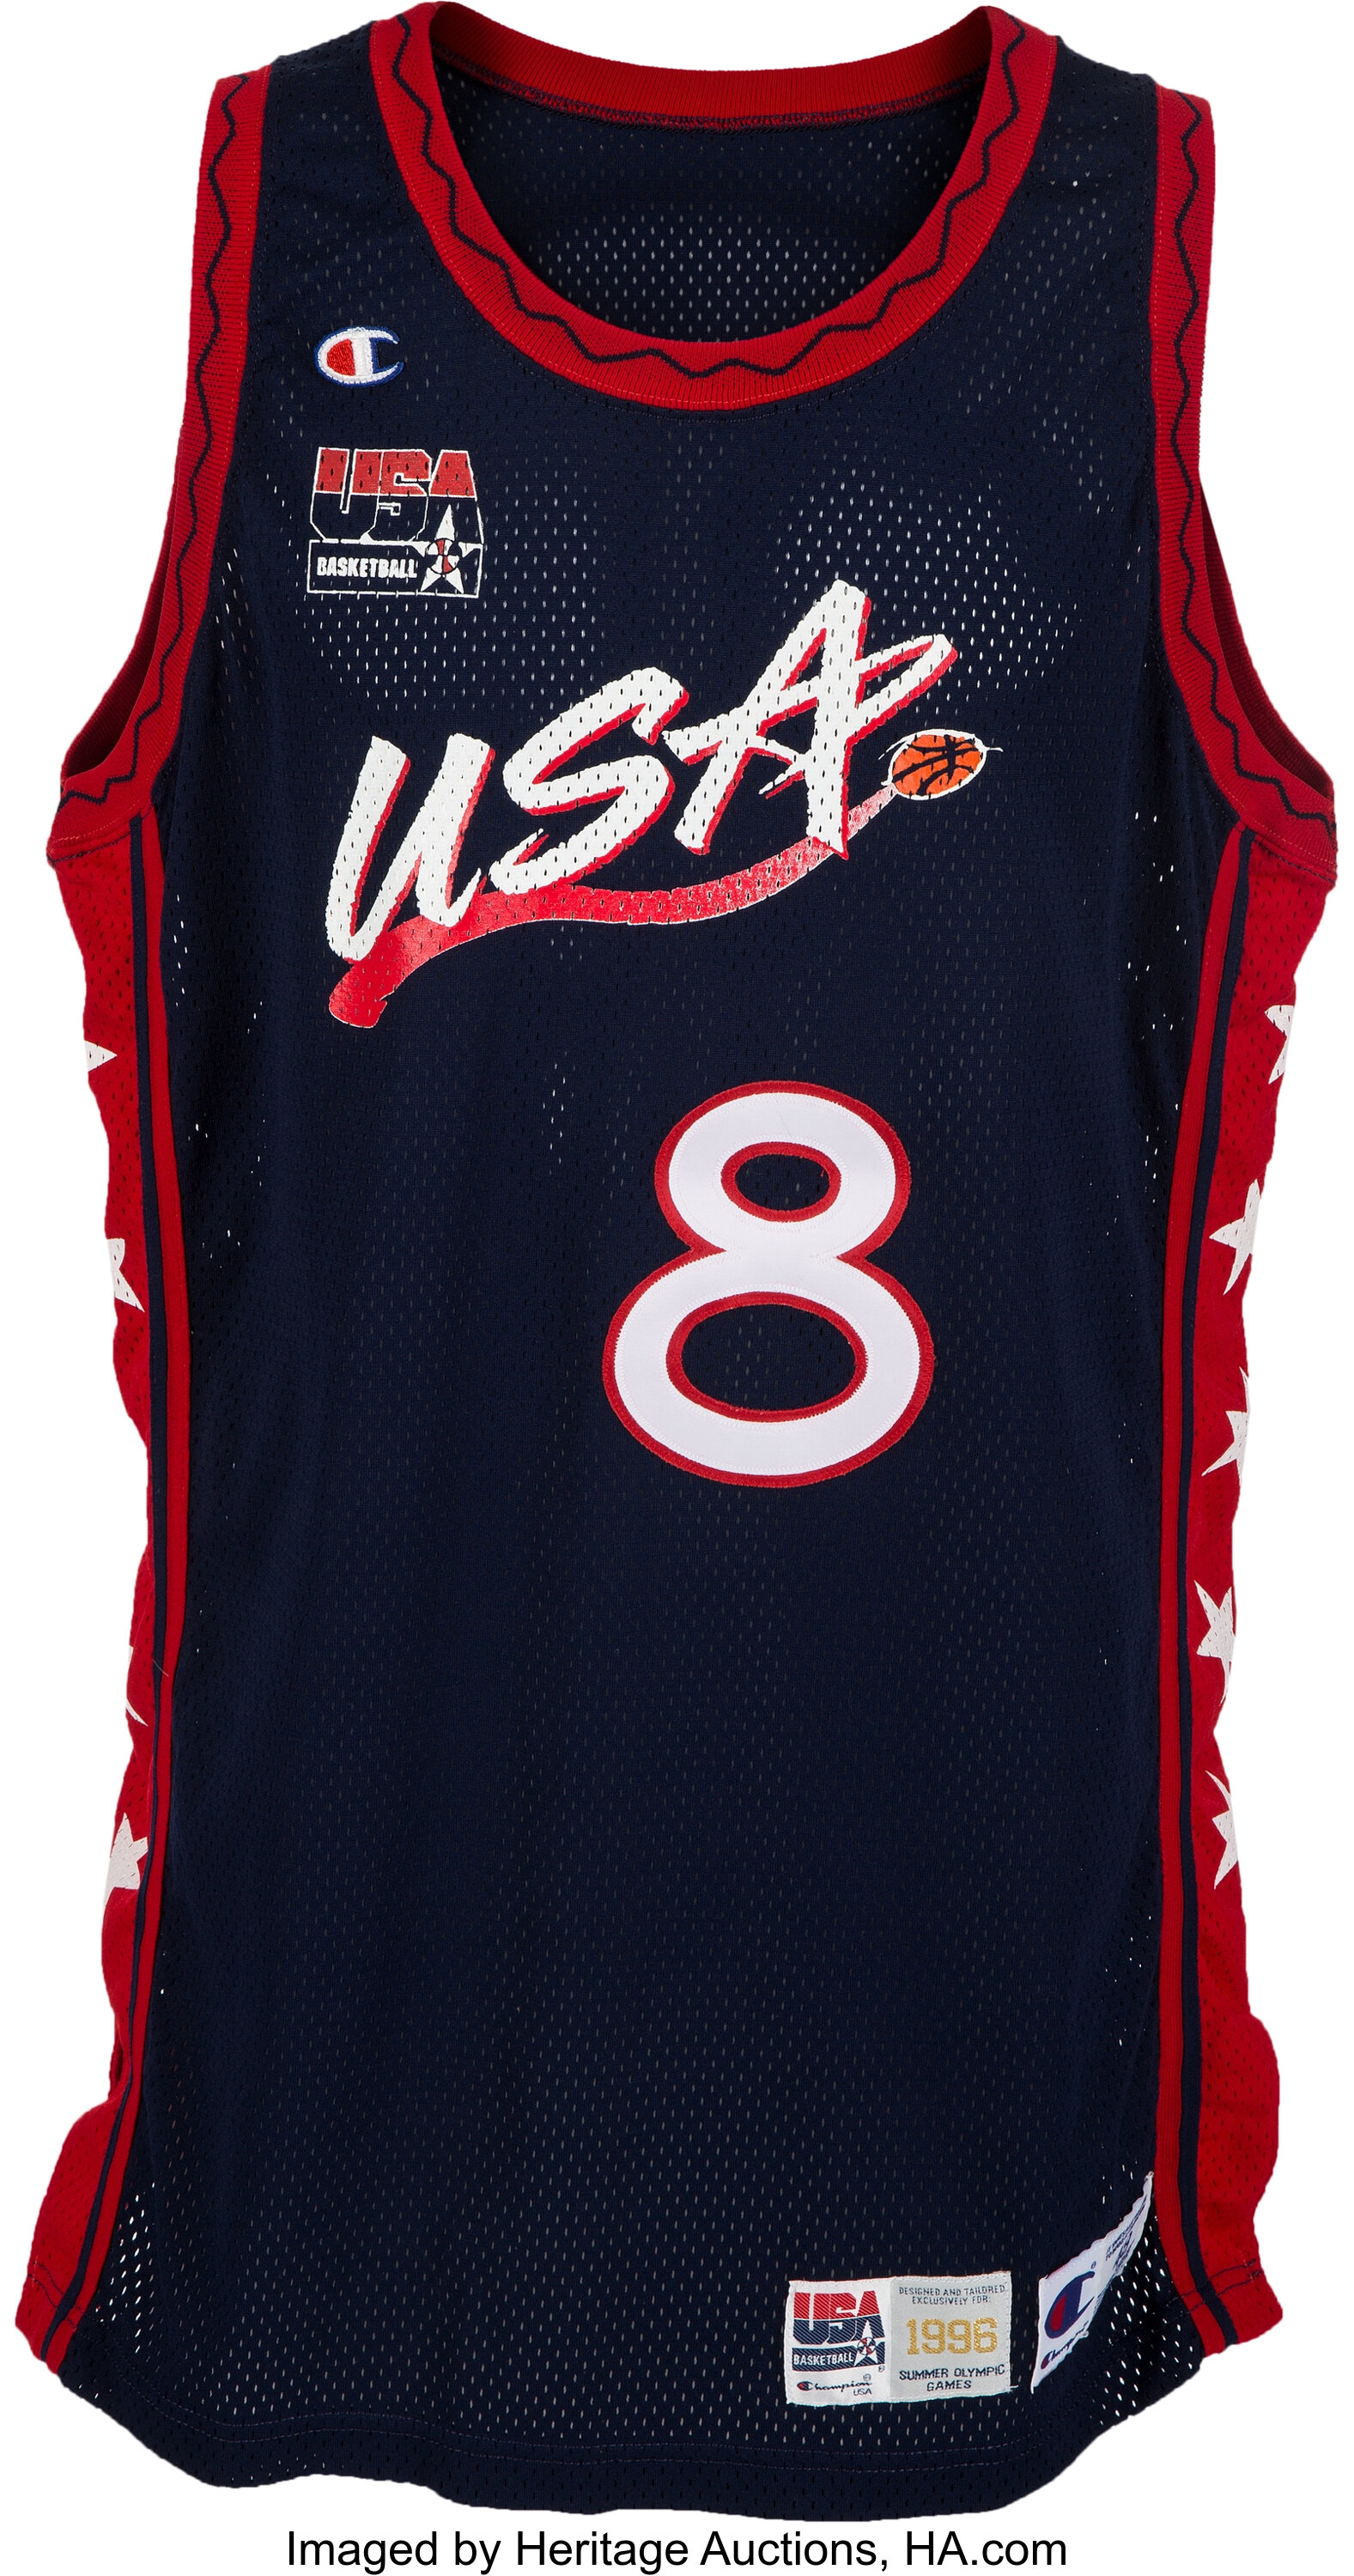 1996 Dream Team USA Basketball NBA Poster